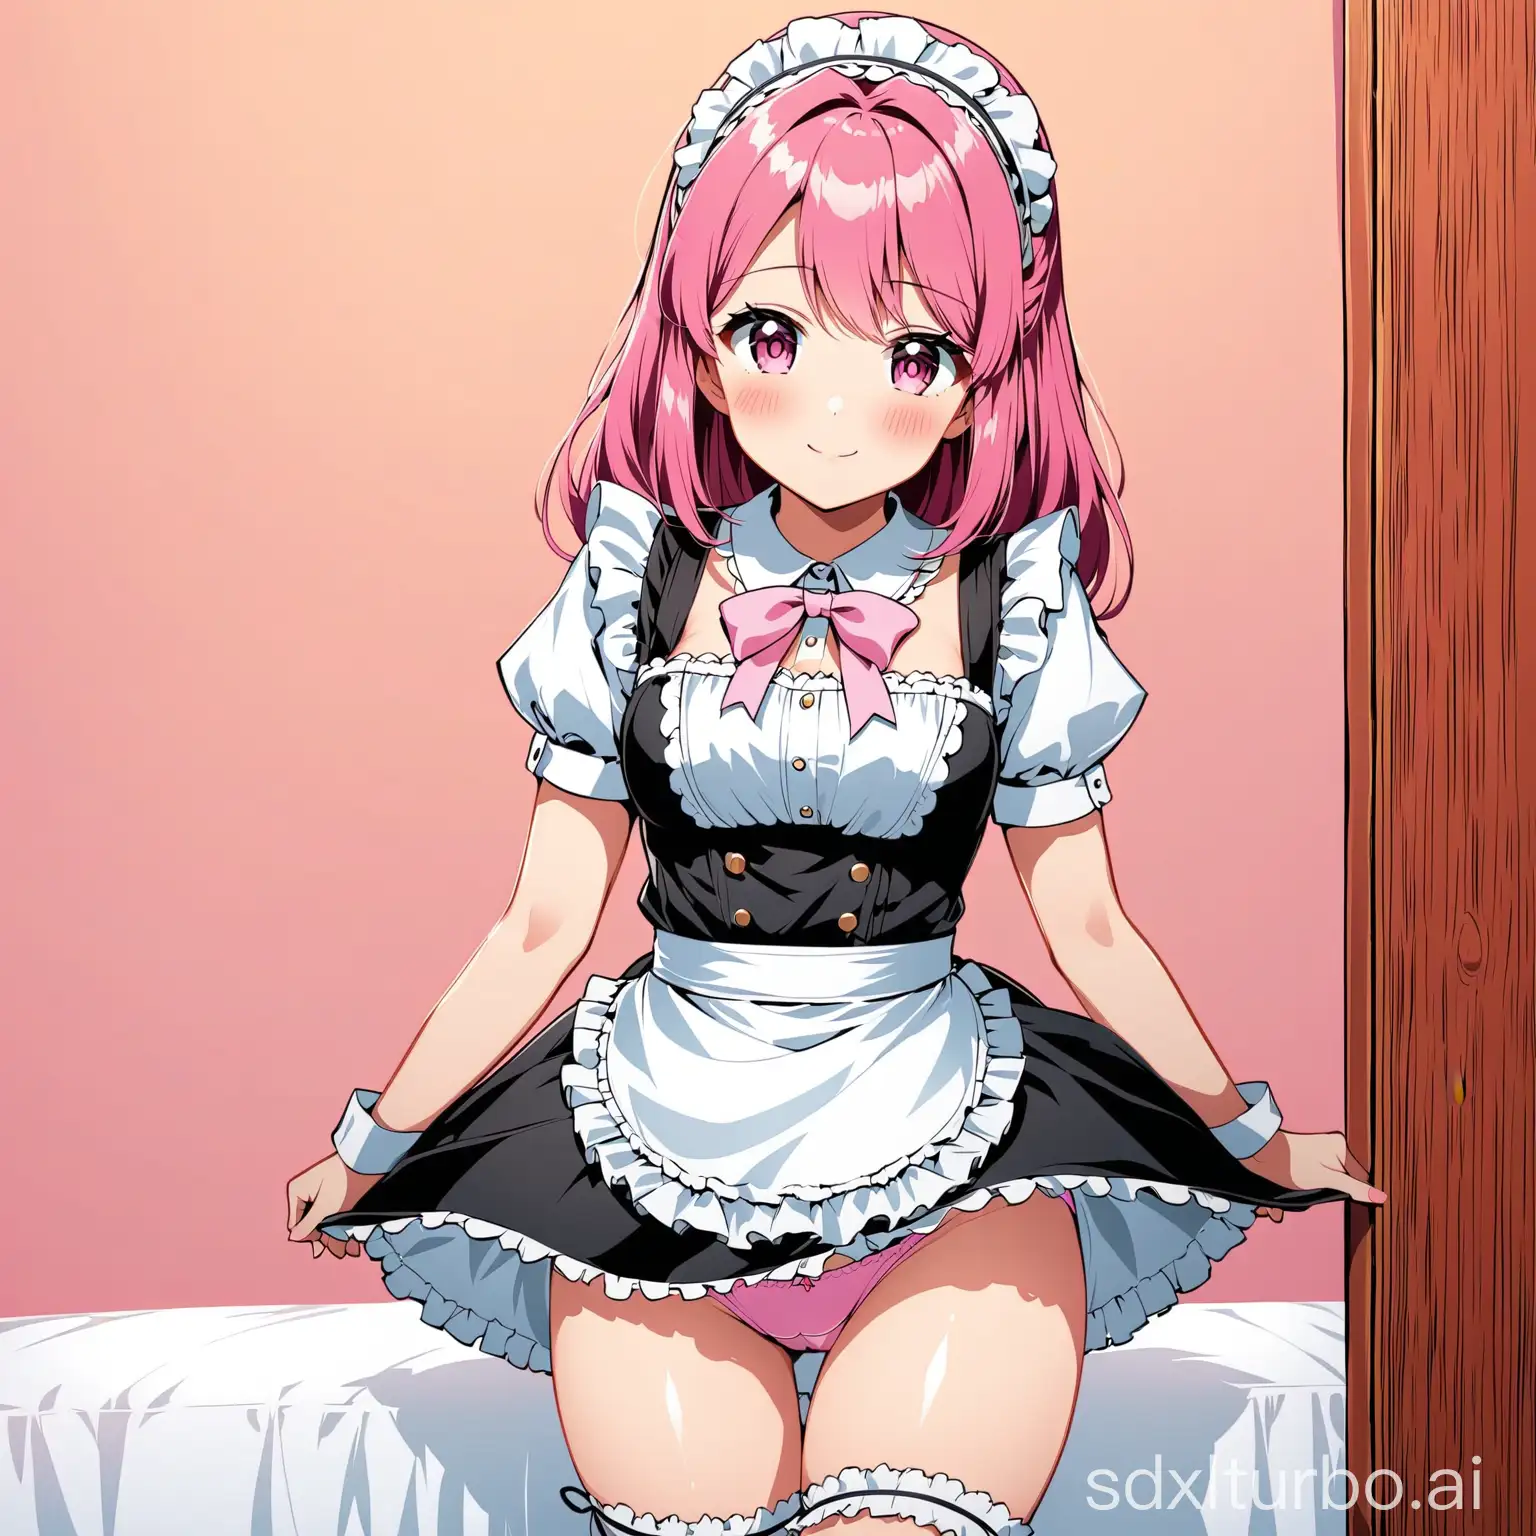 Thigh pink panties maid cute blushing